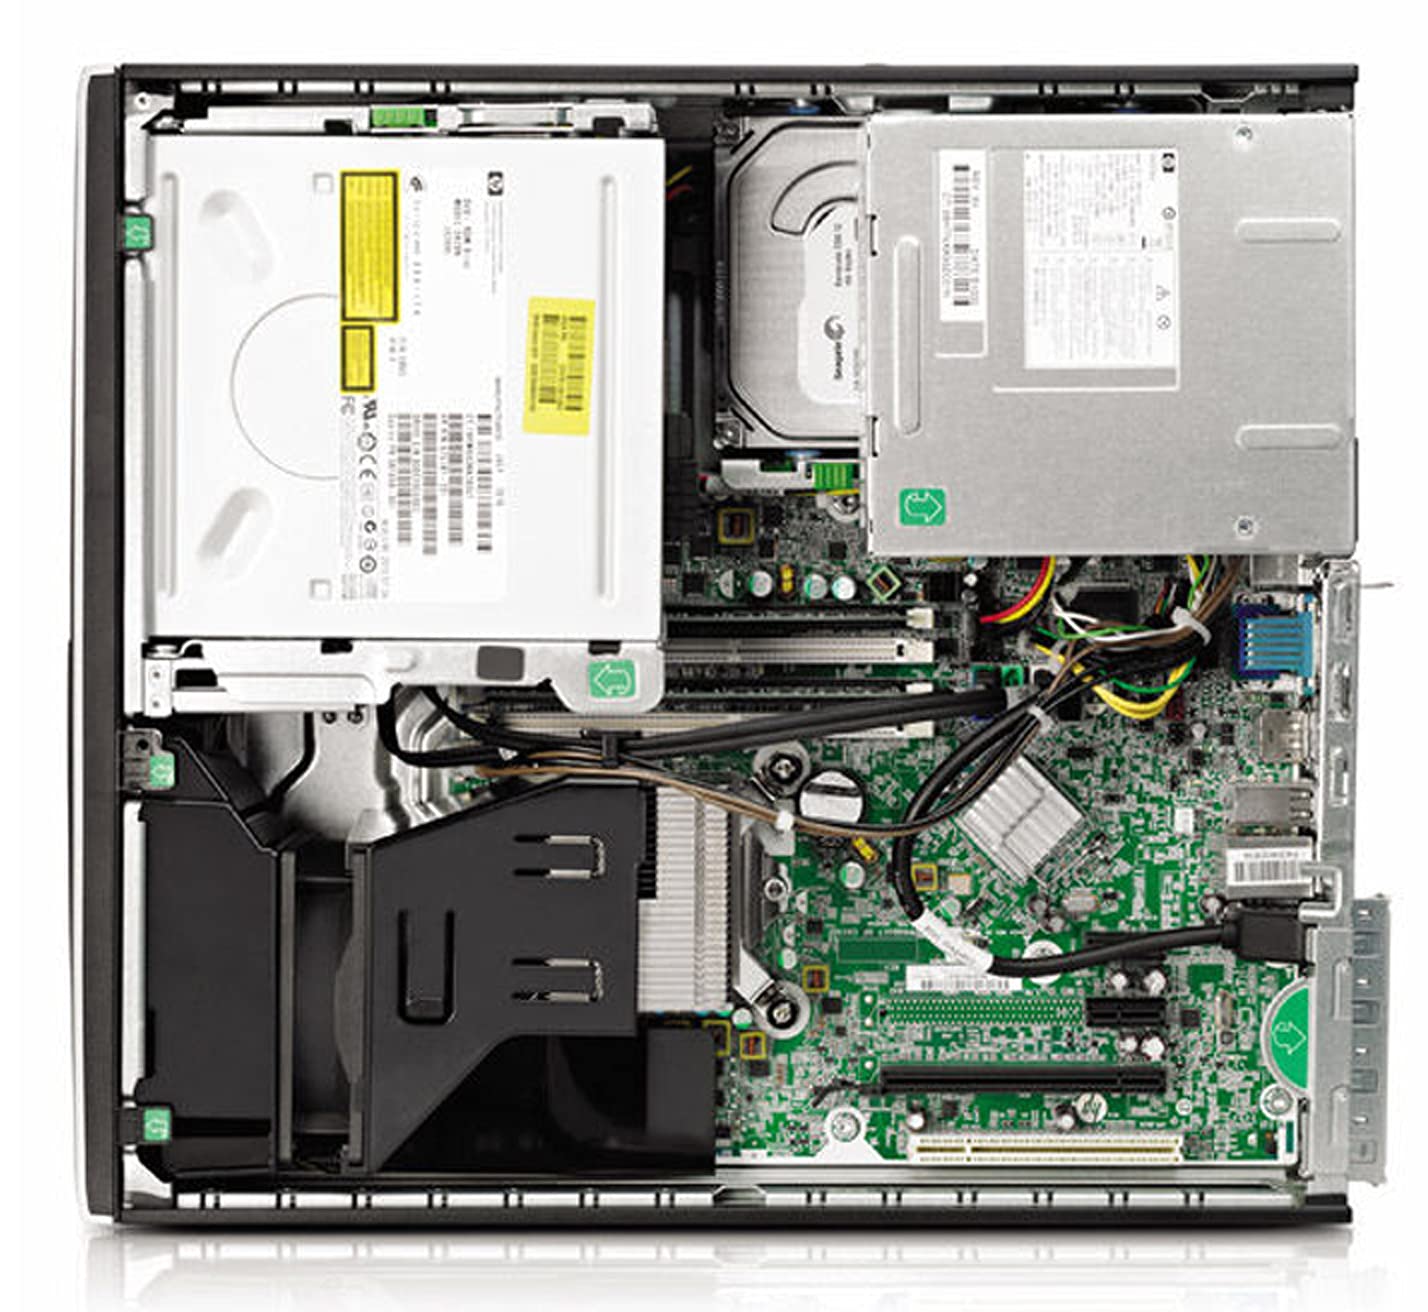 HP Elite SFF Desktop Computer PC, Intel Core i7 3.4GHZ Processor, 16GB Ram, 128GB M.2 SSD + 1TB Hard Drive, WiFi & Bluetooth, Wireless Keyboard Mouse, 24 Inch FHD LED Monitor, Windows 10 (Renewed)